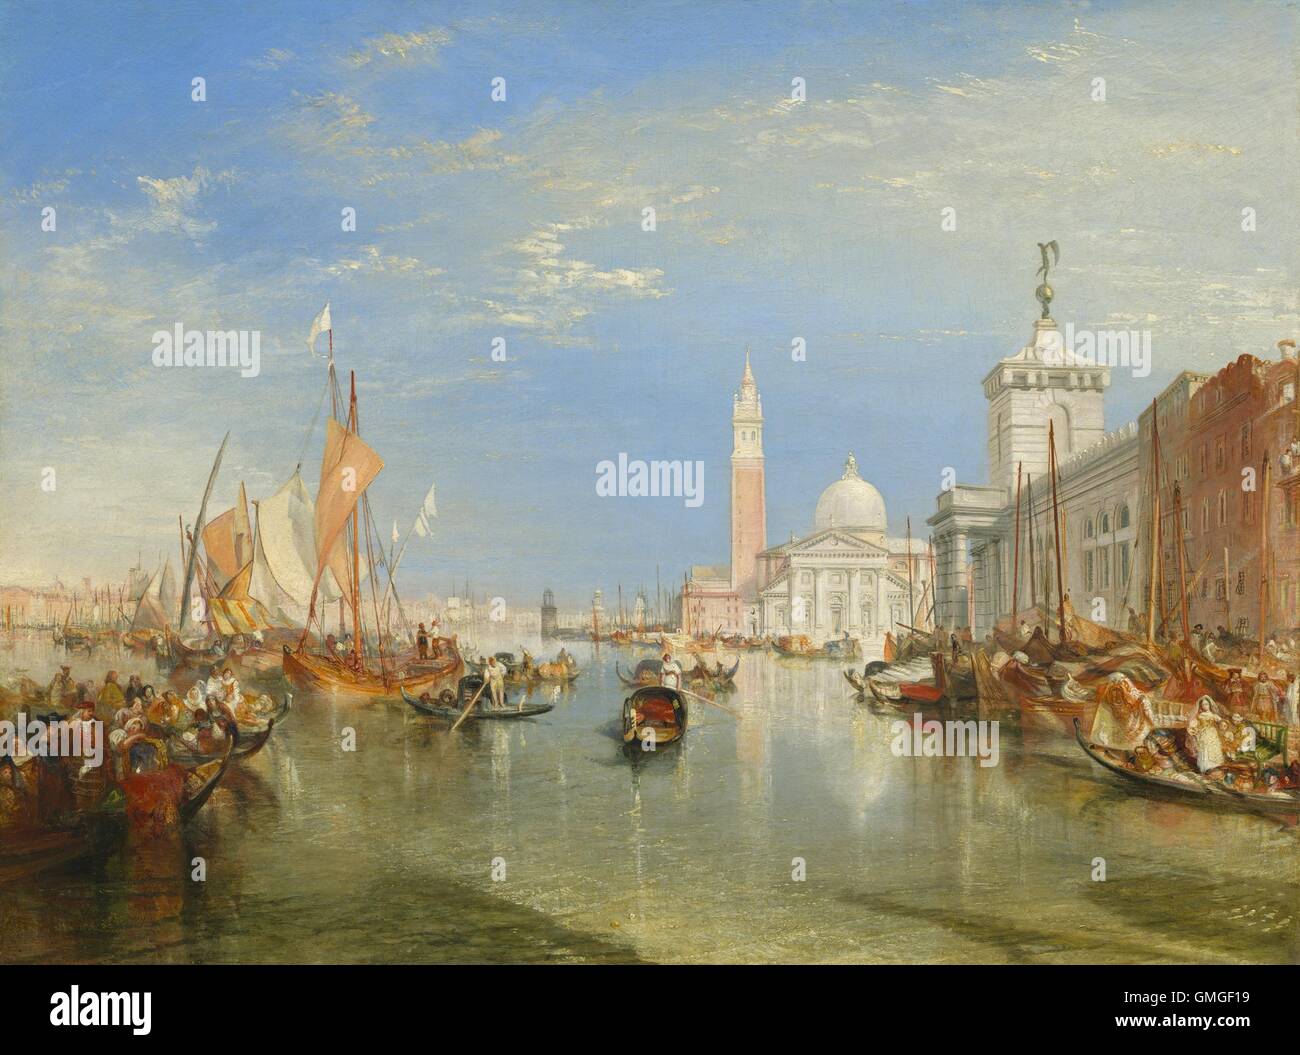 Venise : La Dogana et San Giorgio Maggiore, par Joseph Mallord William Turner, 1834, la peinture, huile sur toile. Vue depuis Banque D'Images